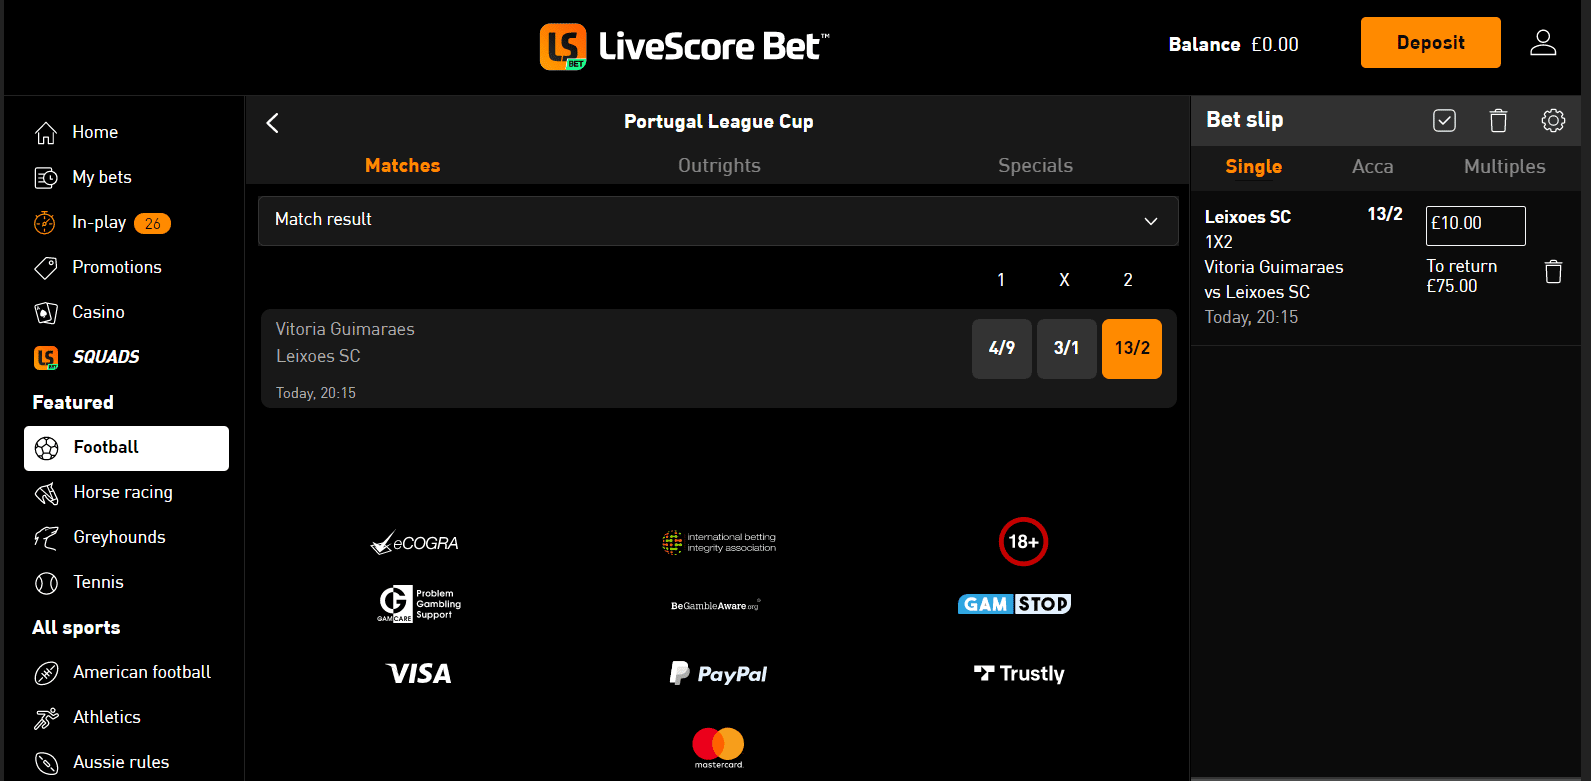 livescore bet review - bet placement